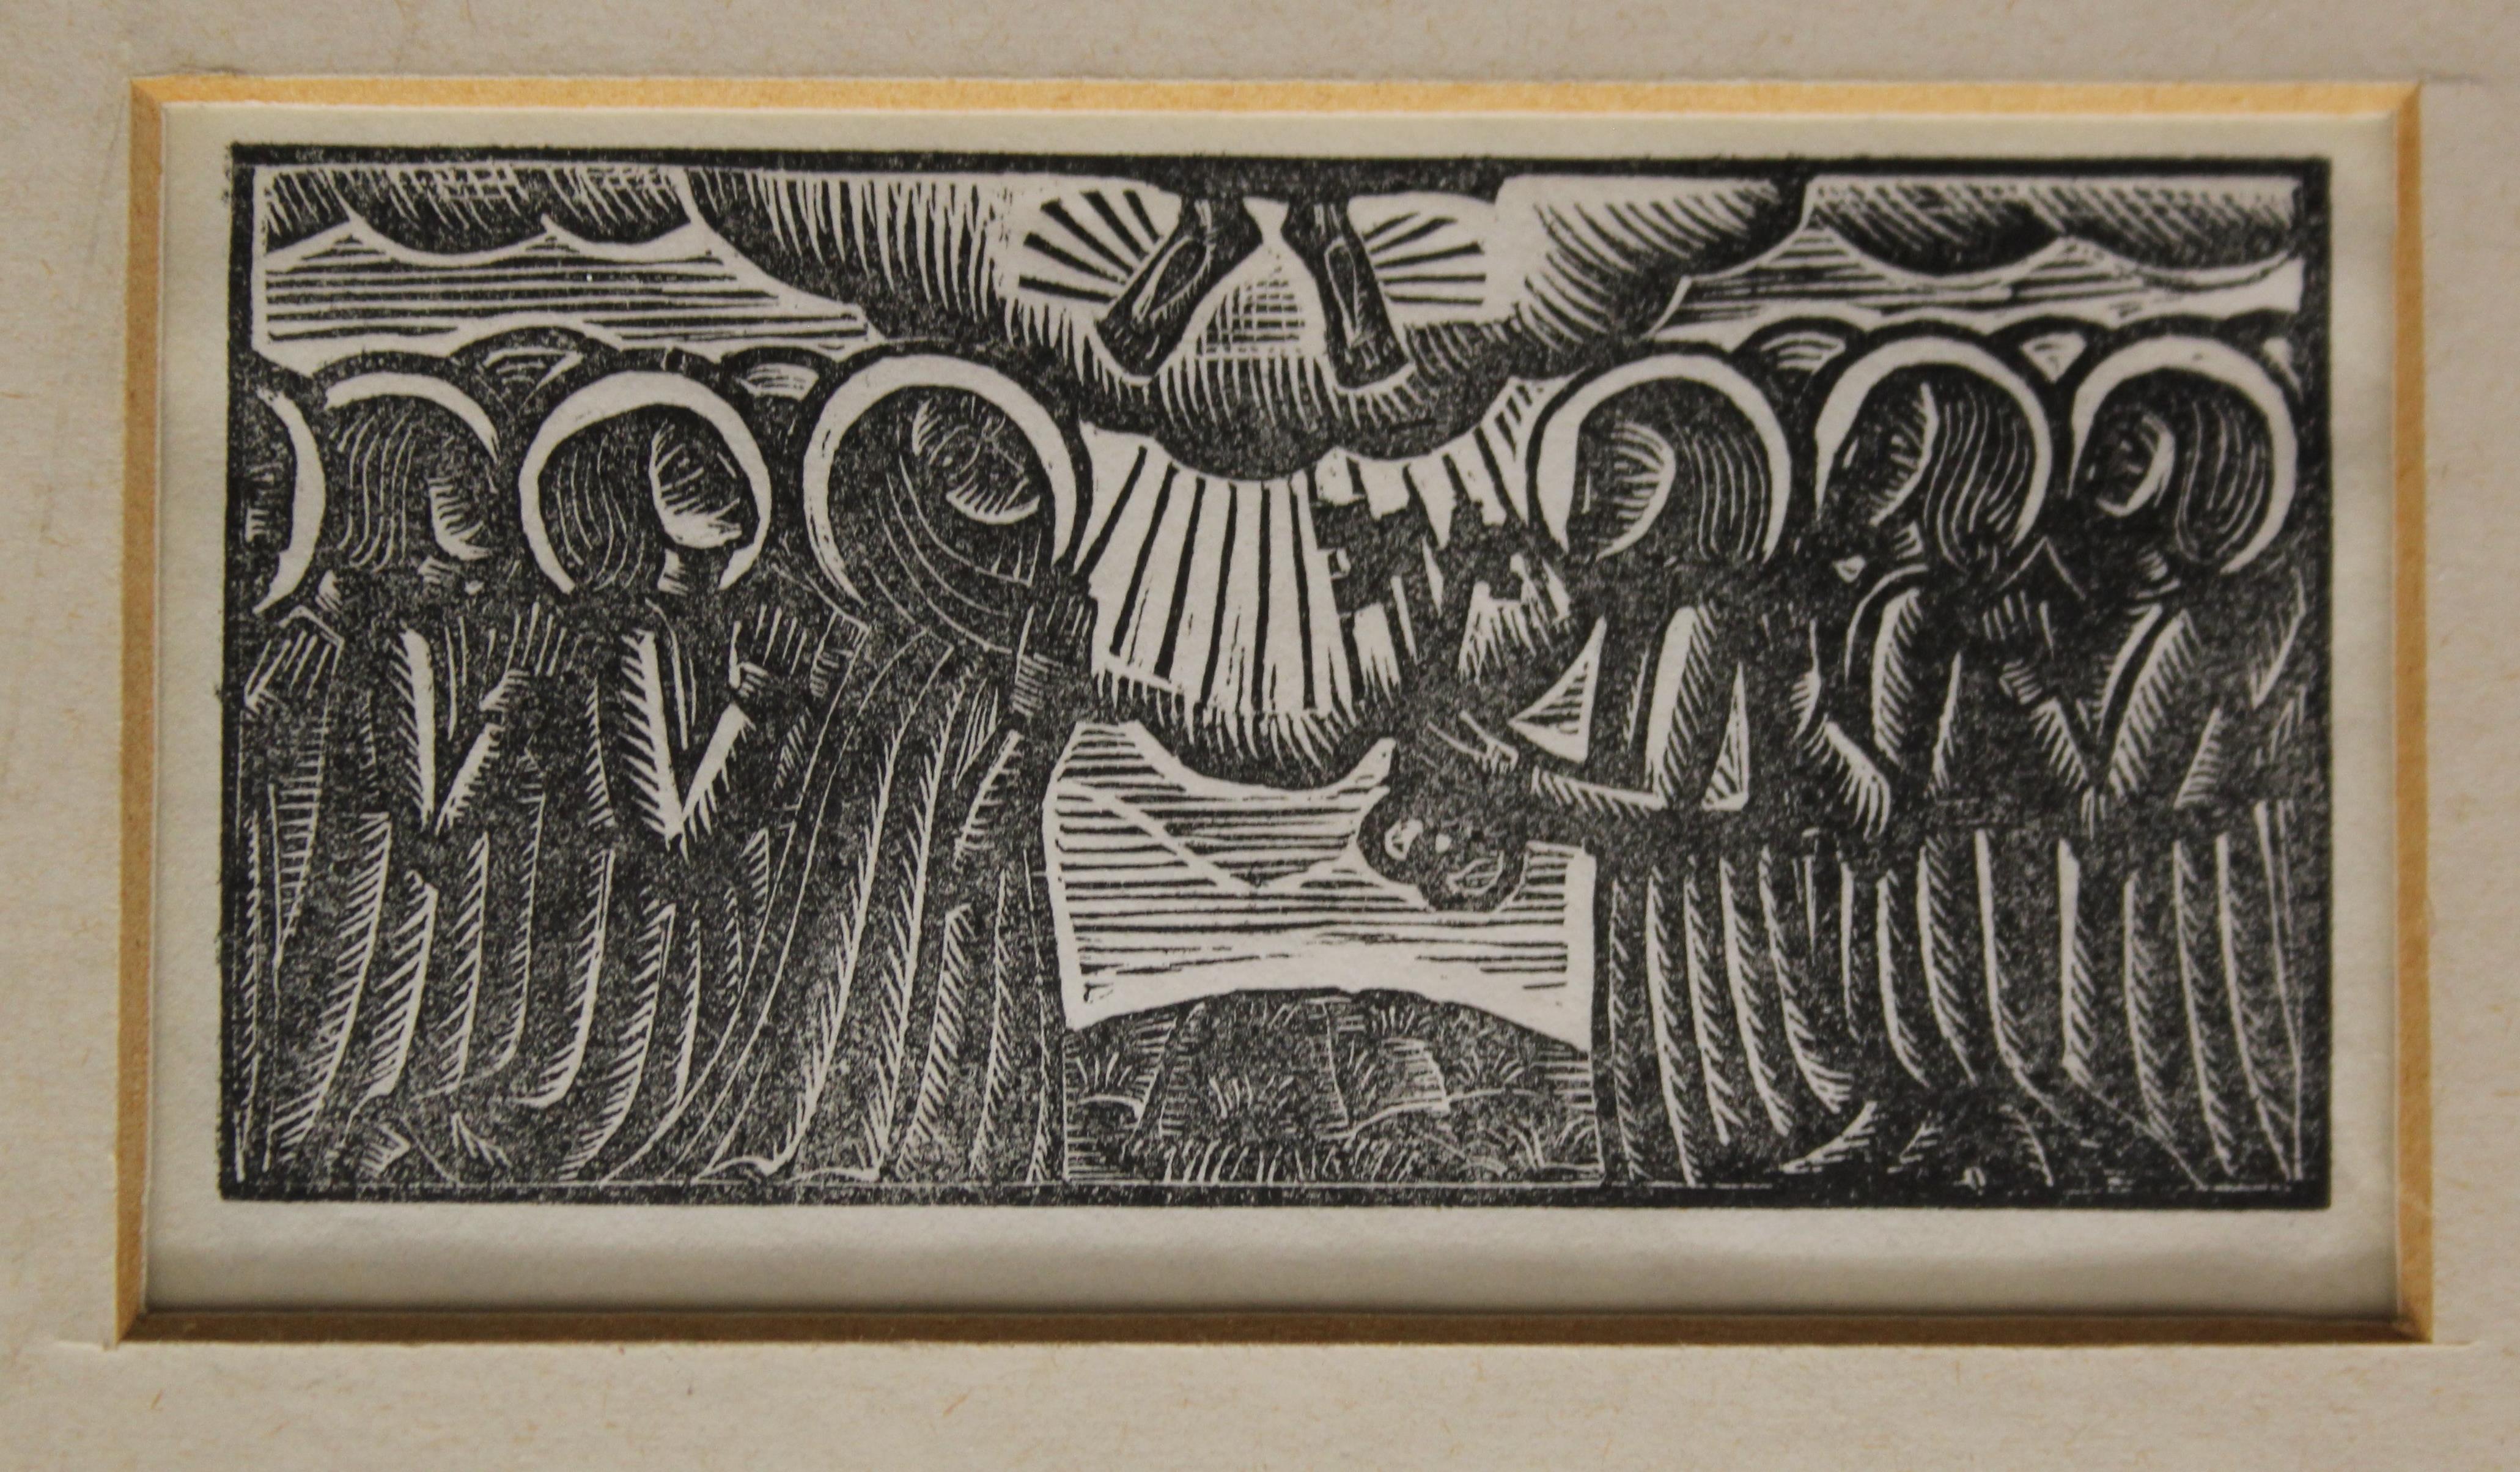 DAVID JONES (1895-1974), woodblock print, mounted. 23.5 x 19.5 cm overall. - Image 2 of 3